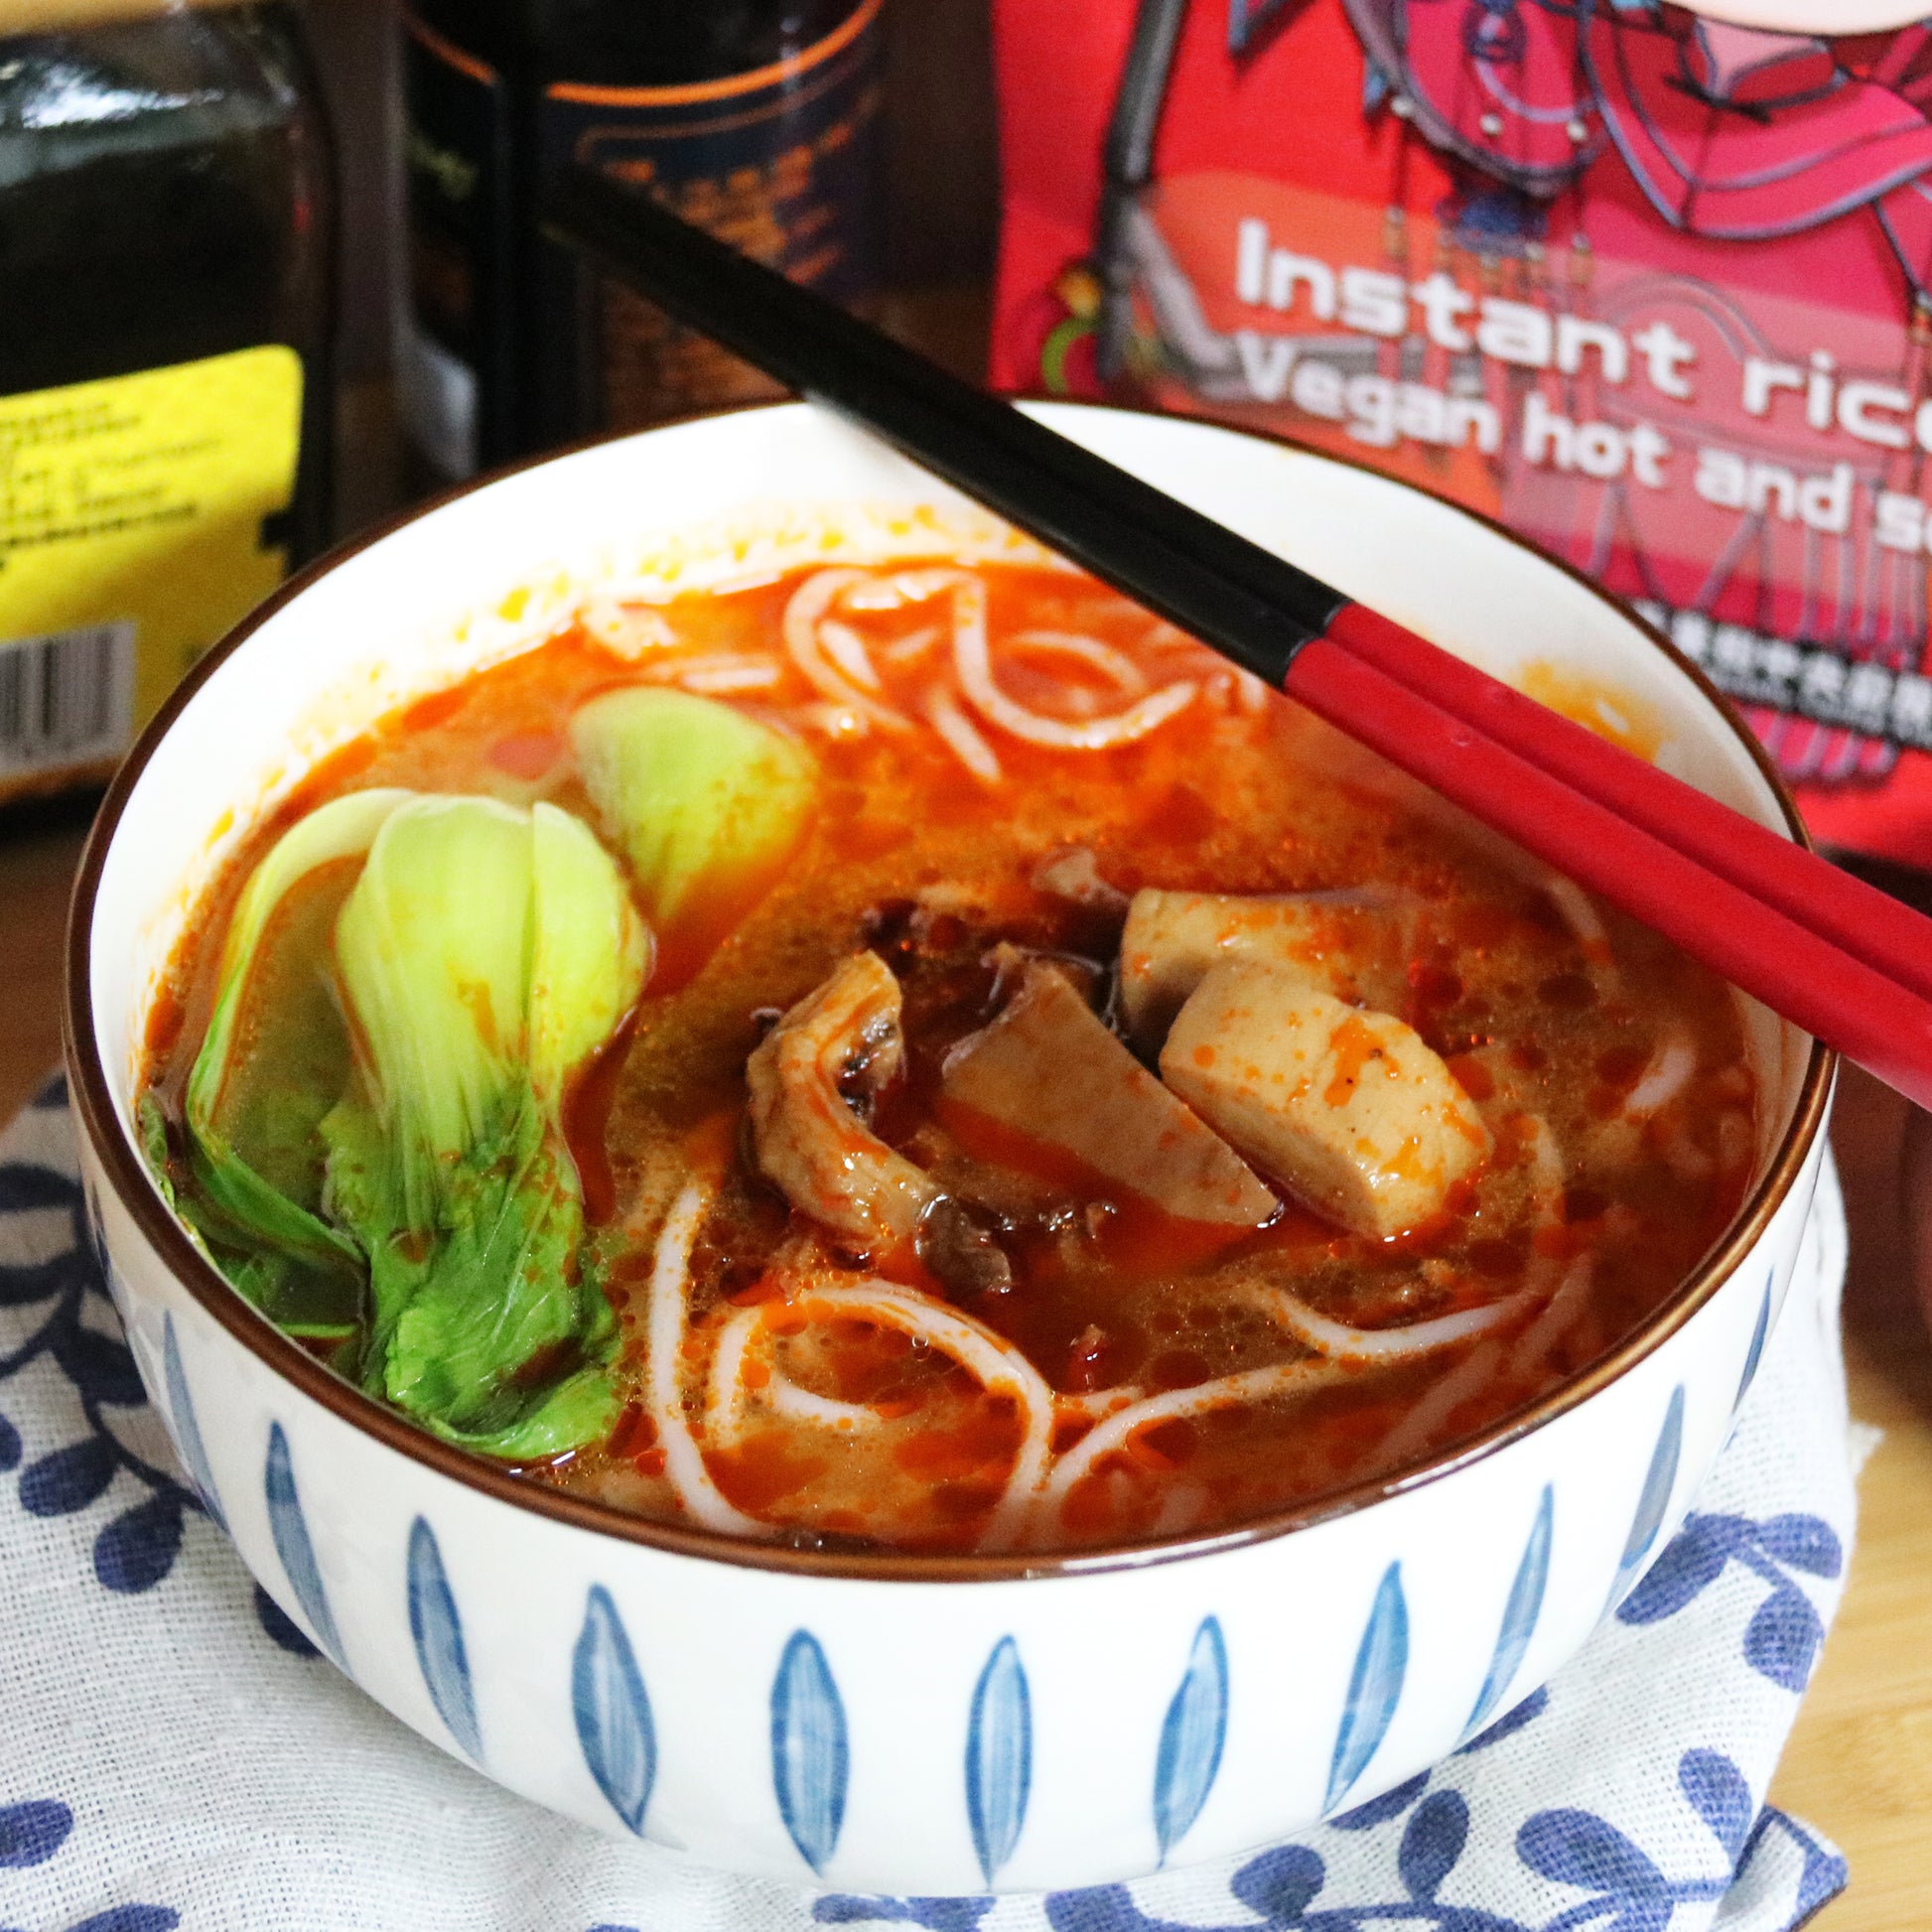 Vegan Hot and Sour Mushroom Instant Rice Noodles main02